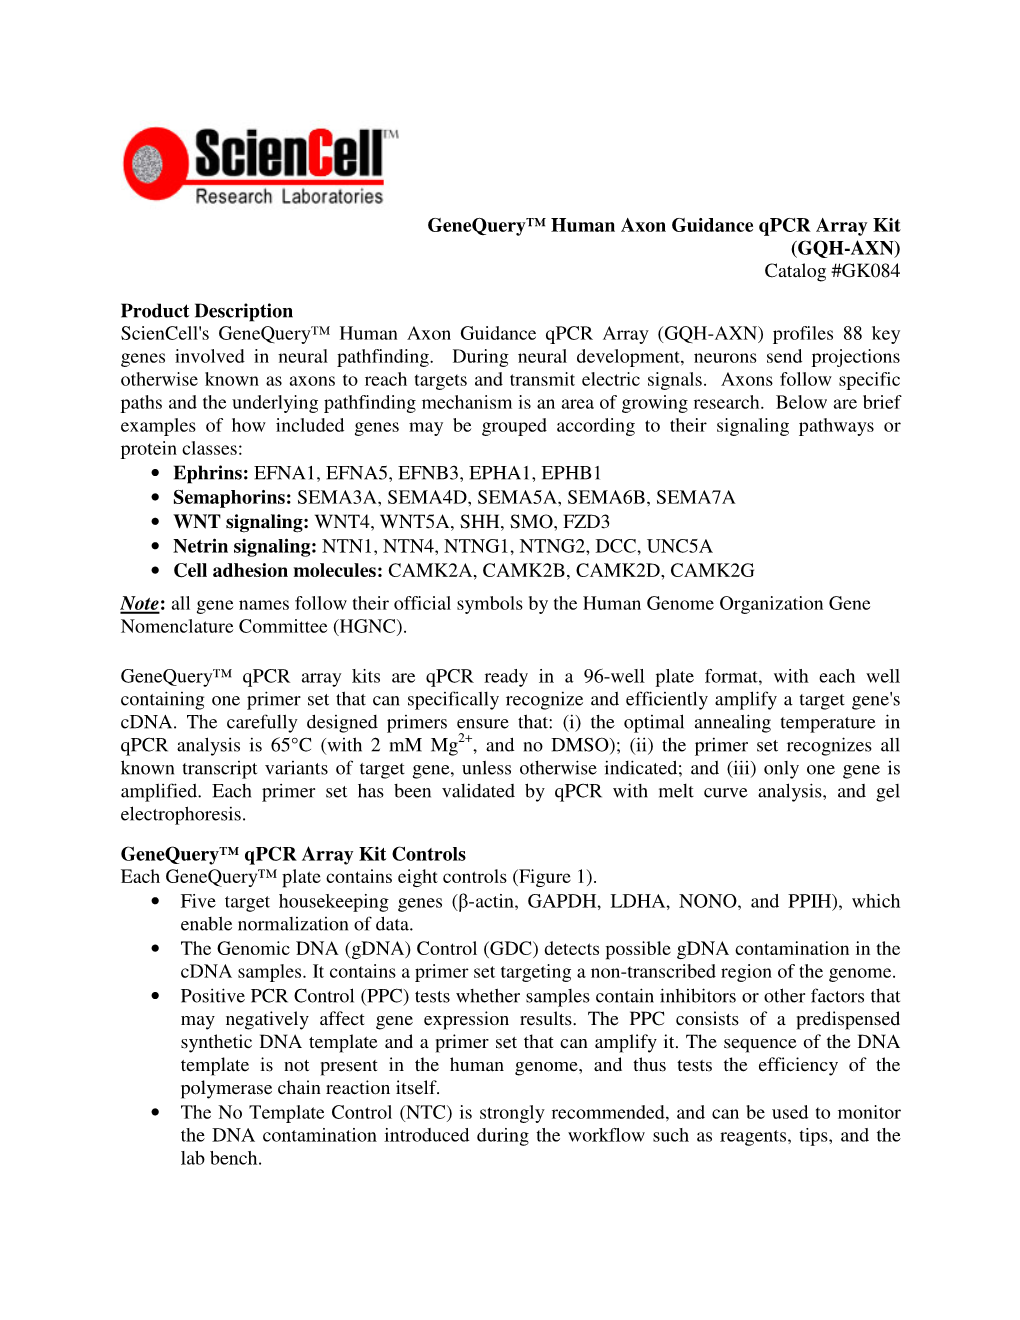 Genequery™ Human Axon Guidance Qpcr Array Kit (GQH-AXN) Catalog #GK084 Product Description Sciencell's Genequery™ Human Axon